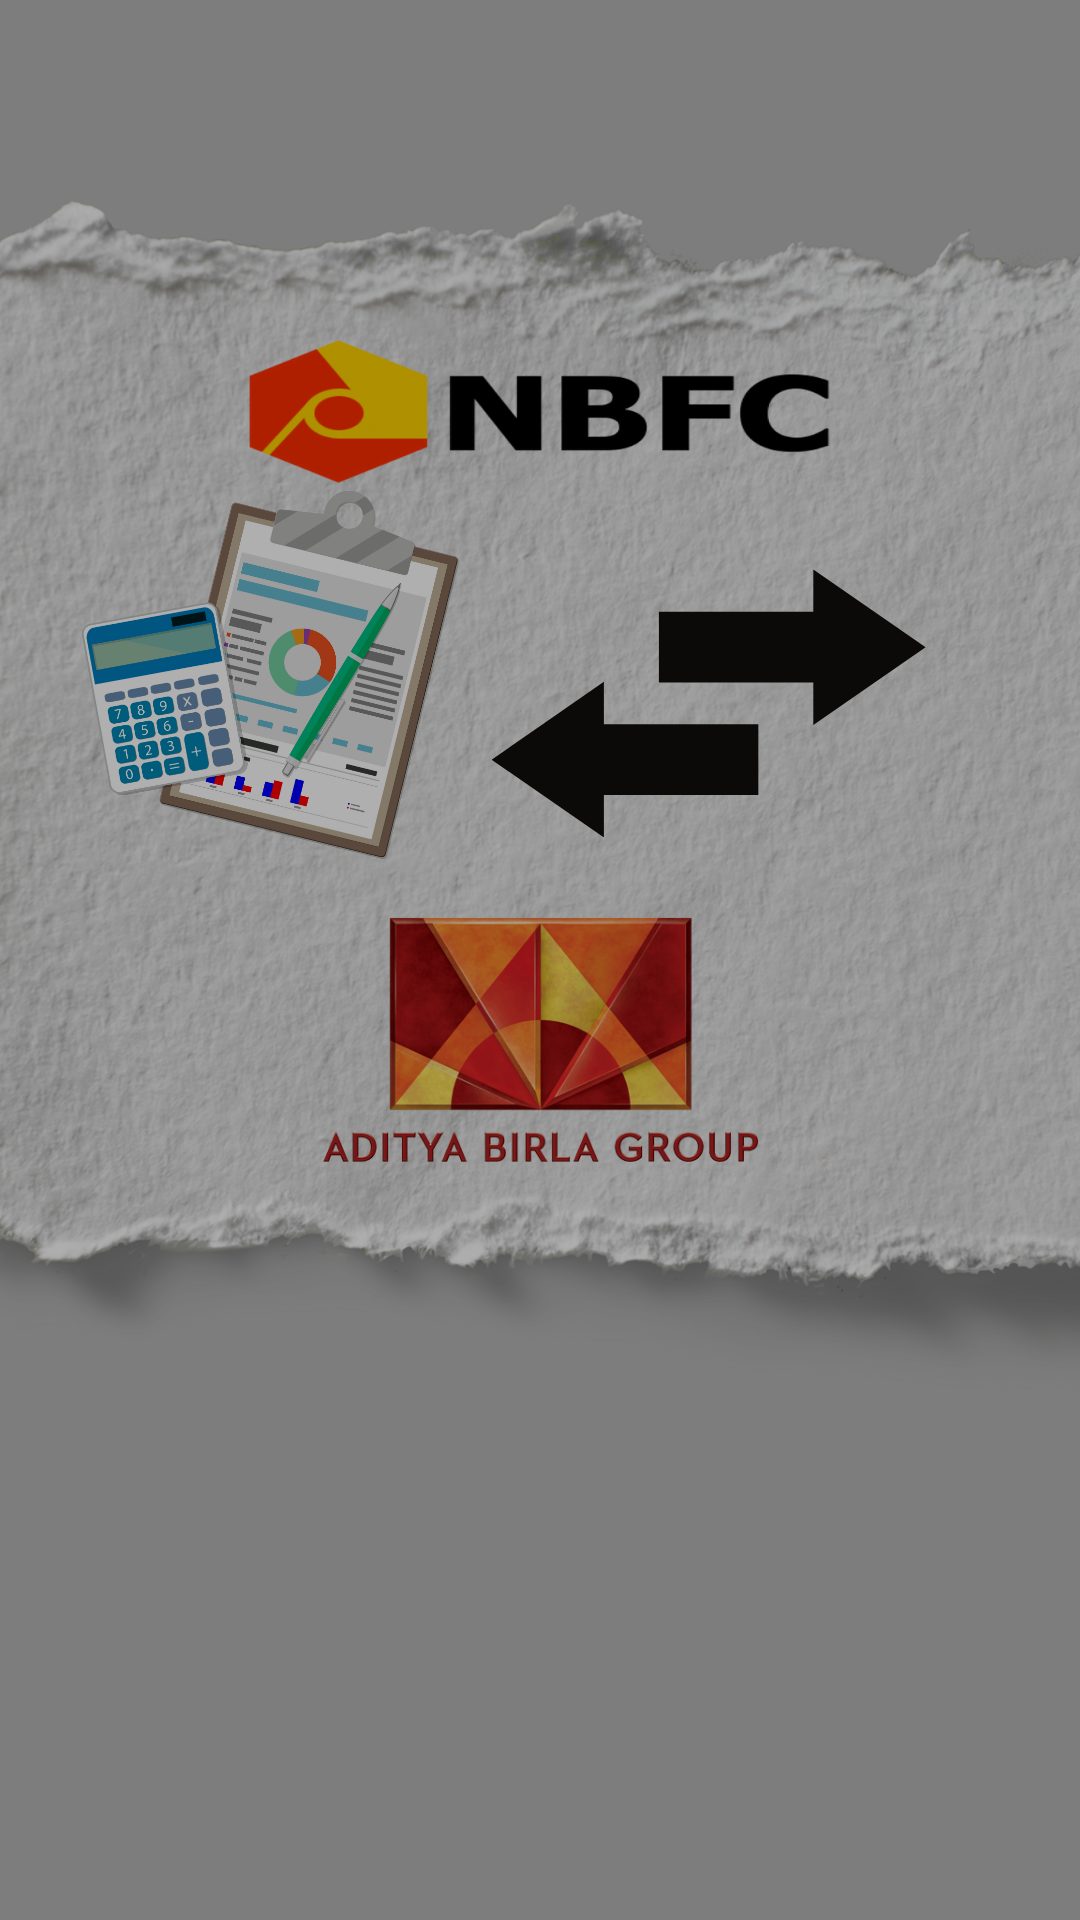 Aditya Birla Finance Limited | LinkedIn